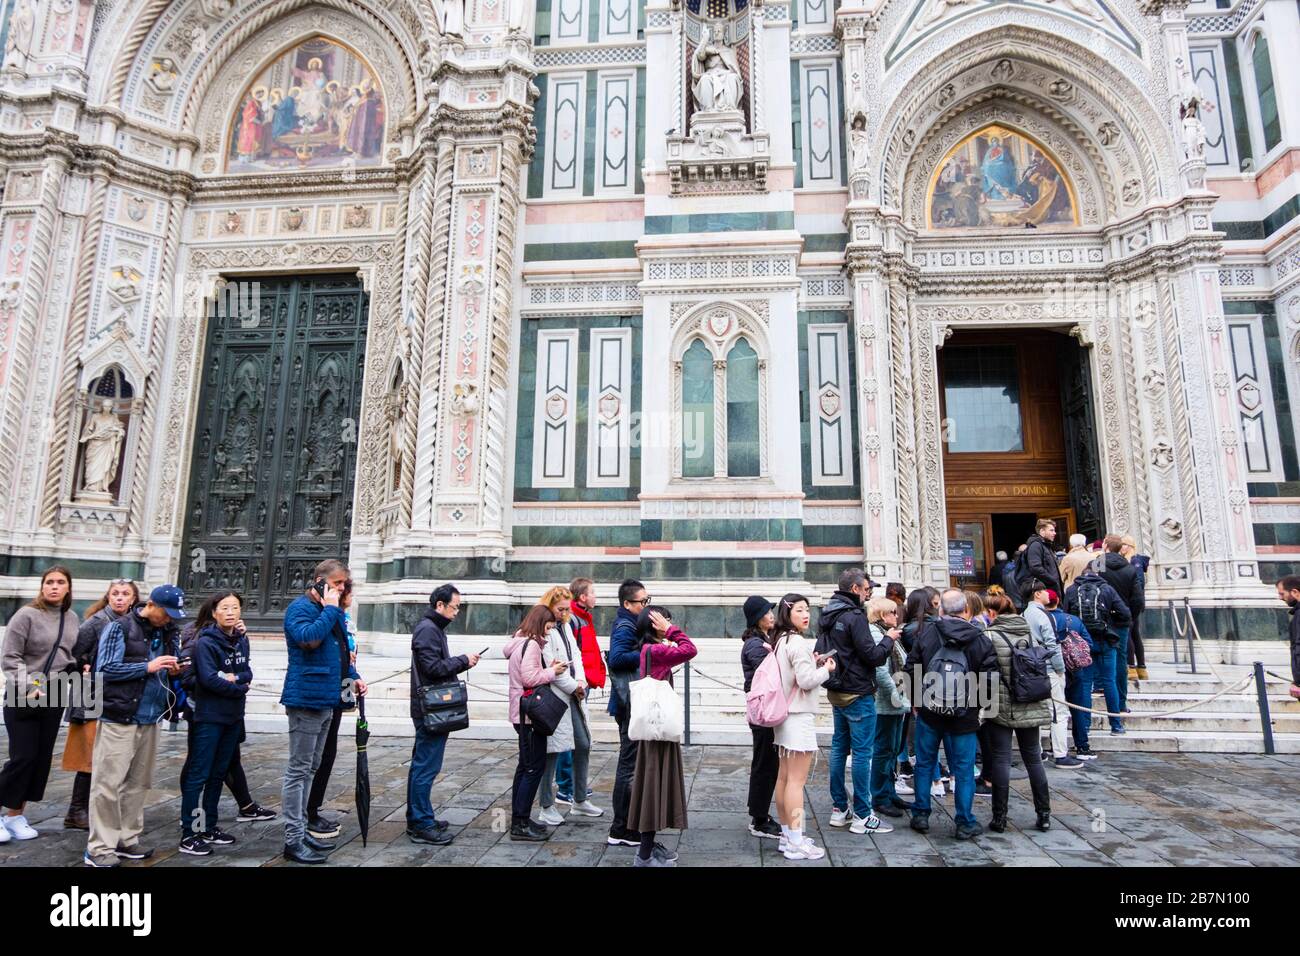 File d'attente pour Duomo, Cattedrale di Santa Maria del Fiore, cathédrale de Florence, Piazza del Duomo, Florence, Italie Banque D'Images